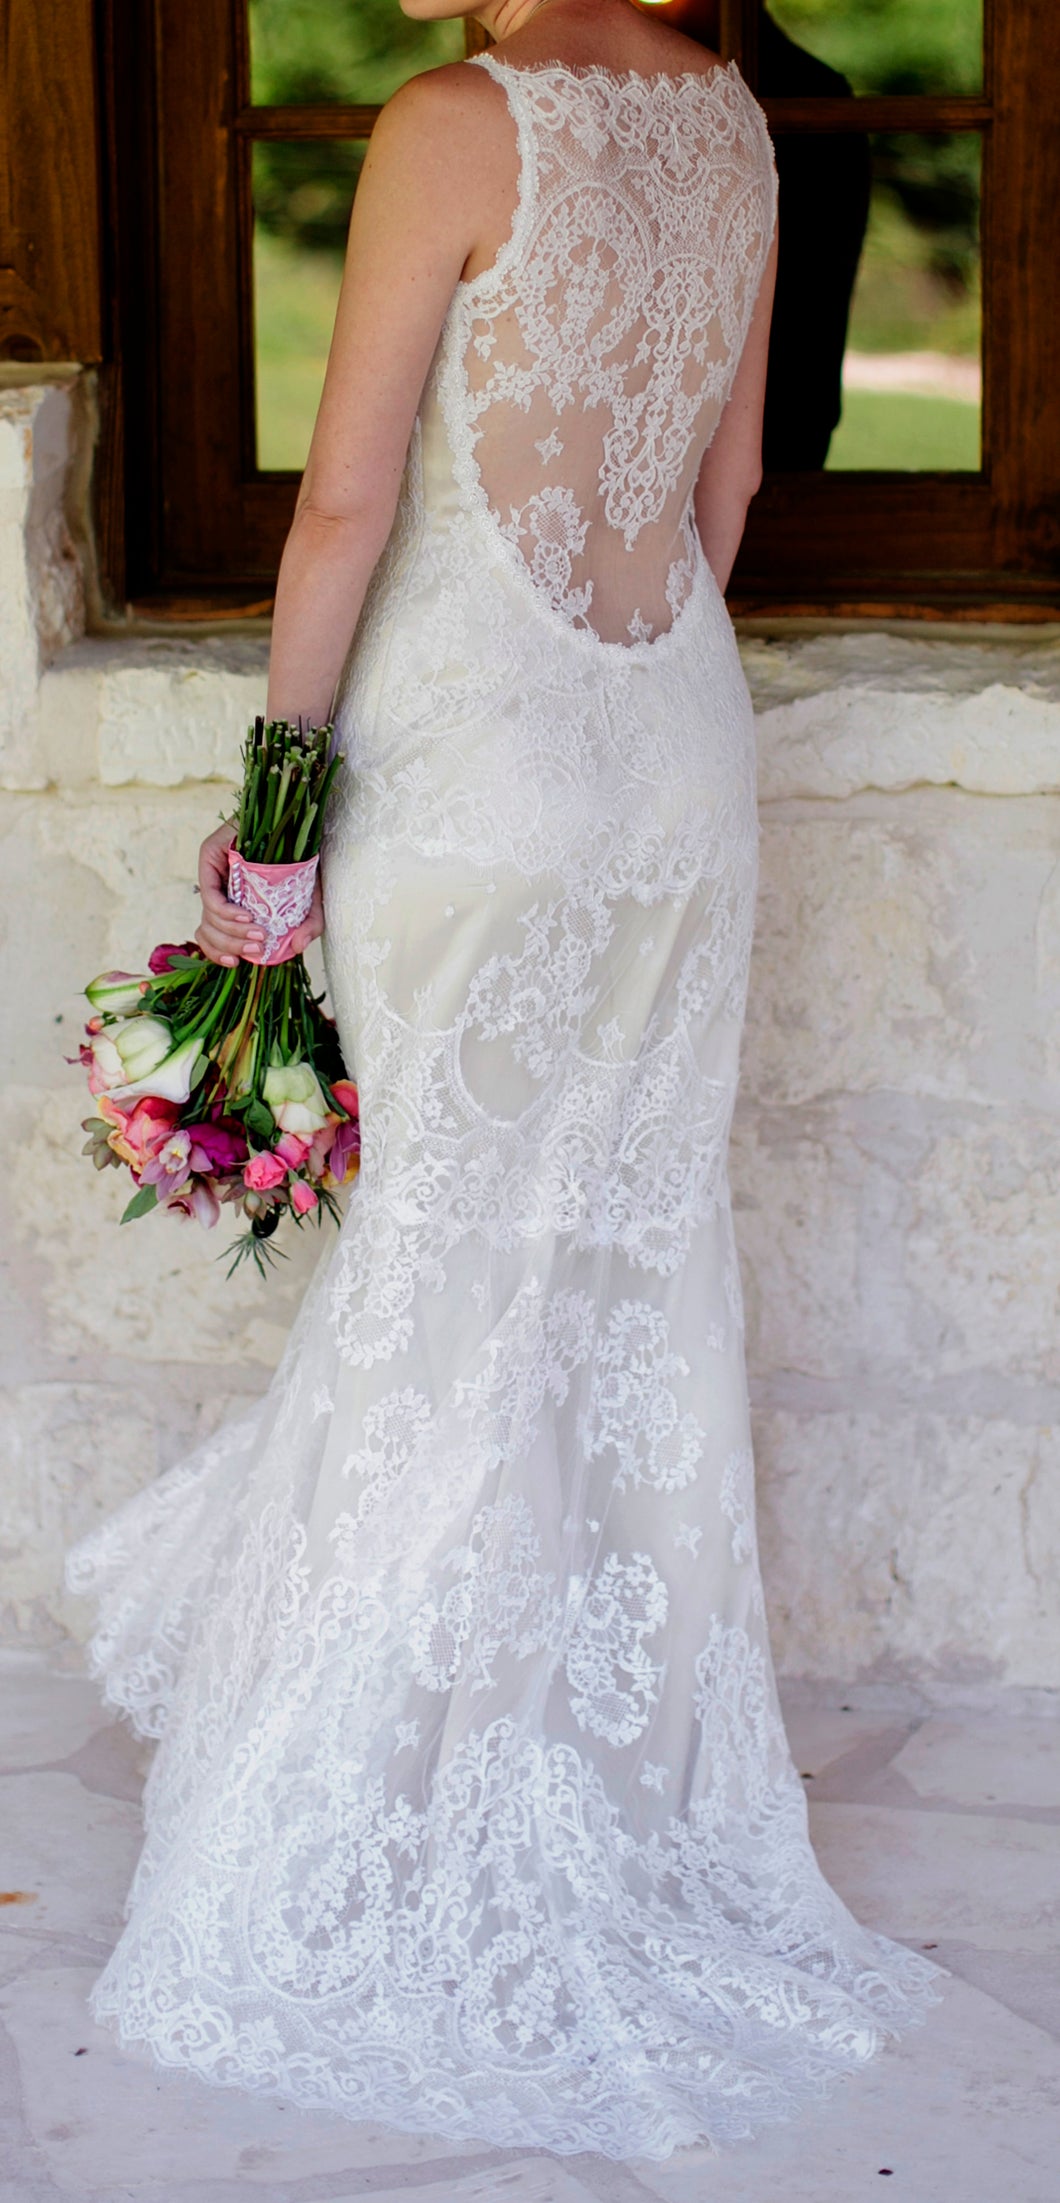 Claire Pettibone 'Alchemy' size 12 used wedding dress back view on bride